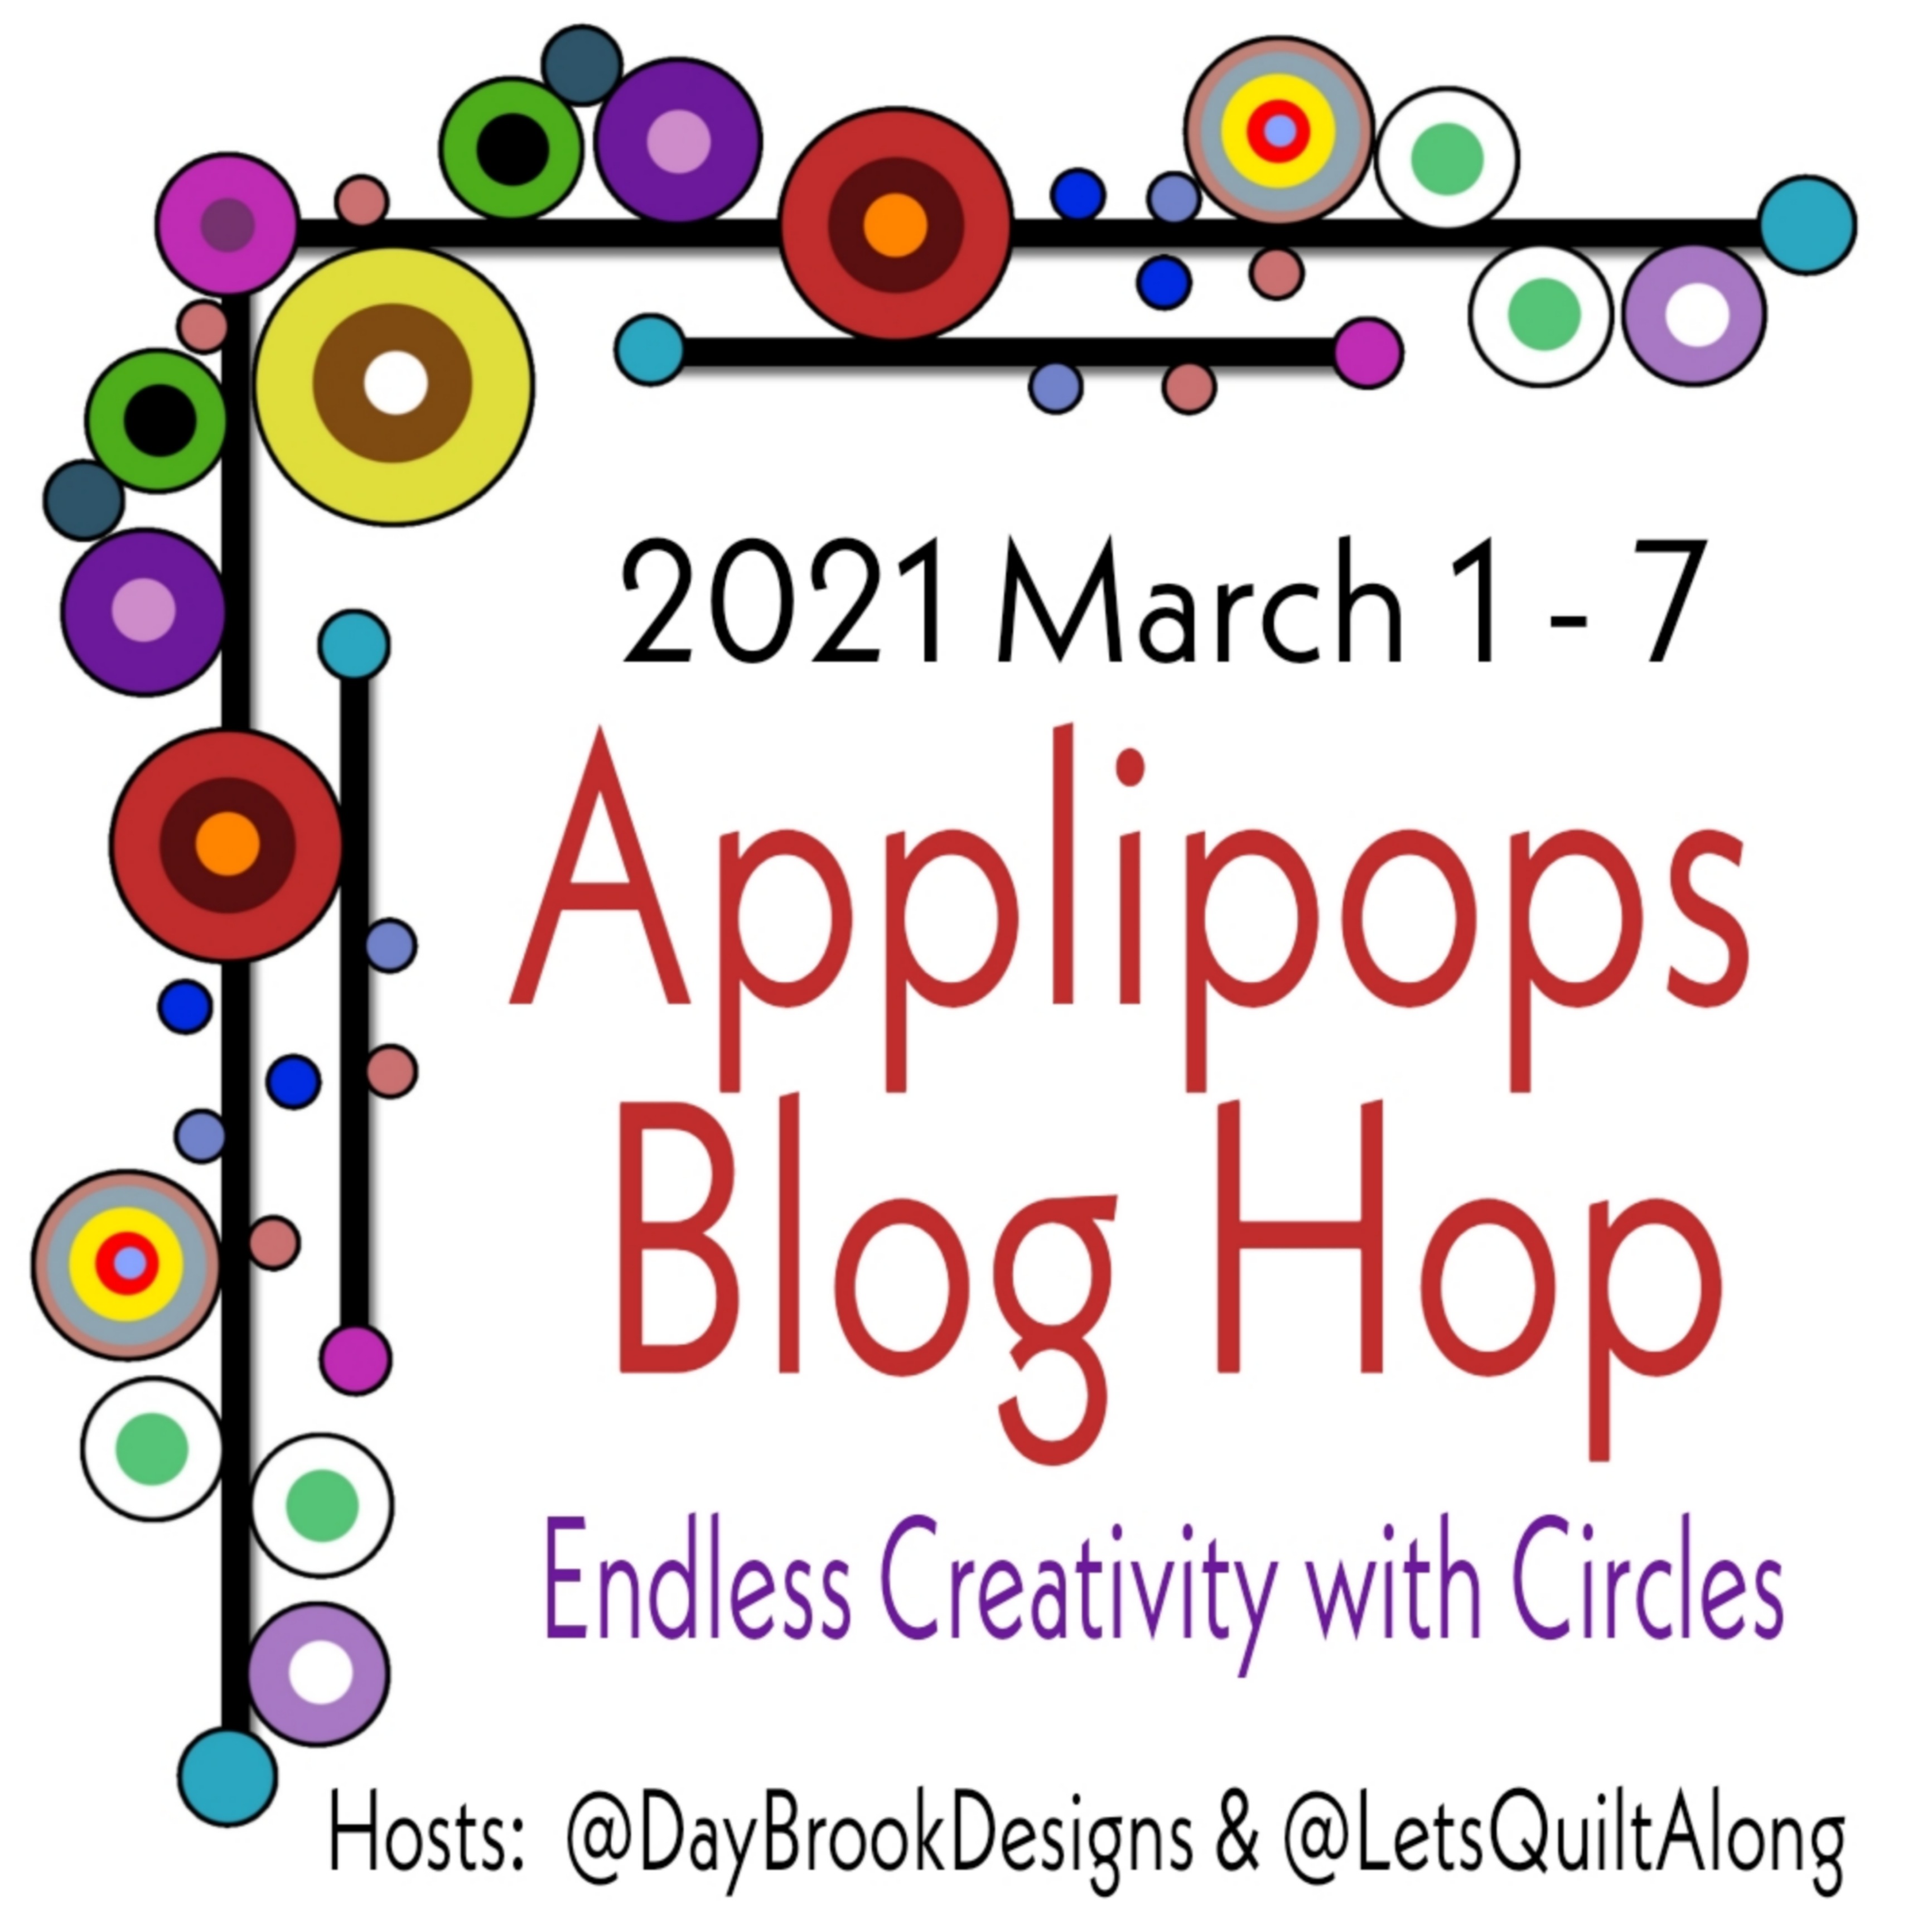 Applipops Blog Hop Logo